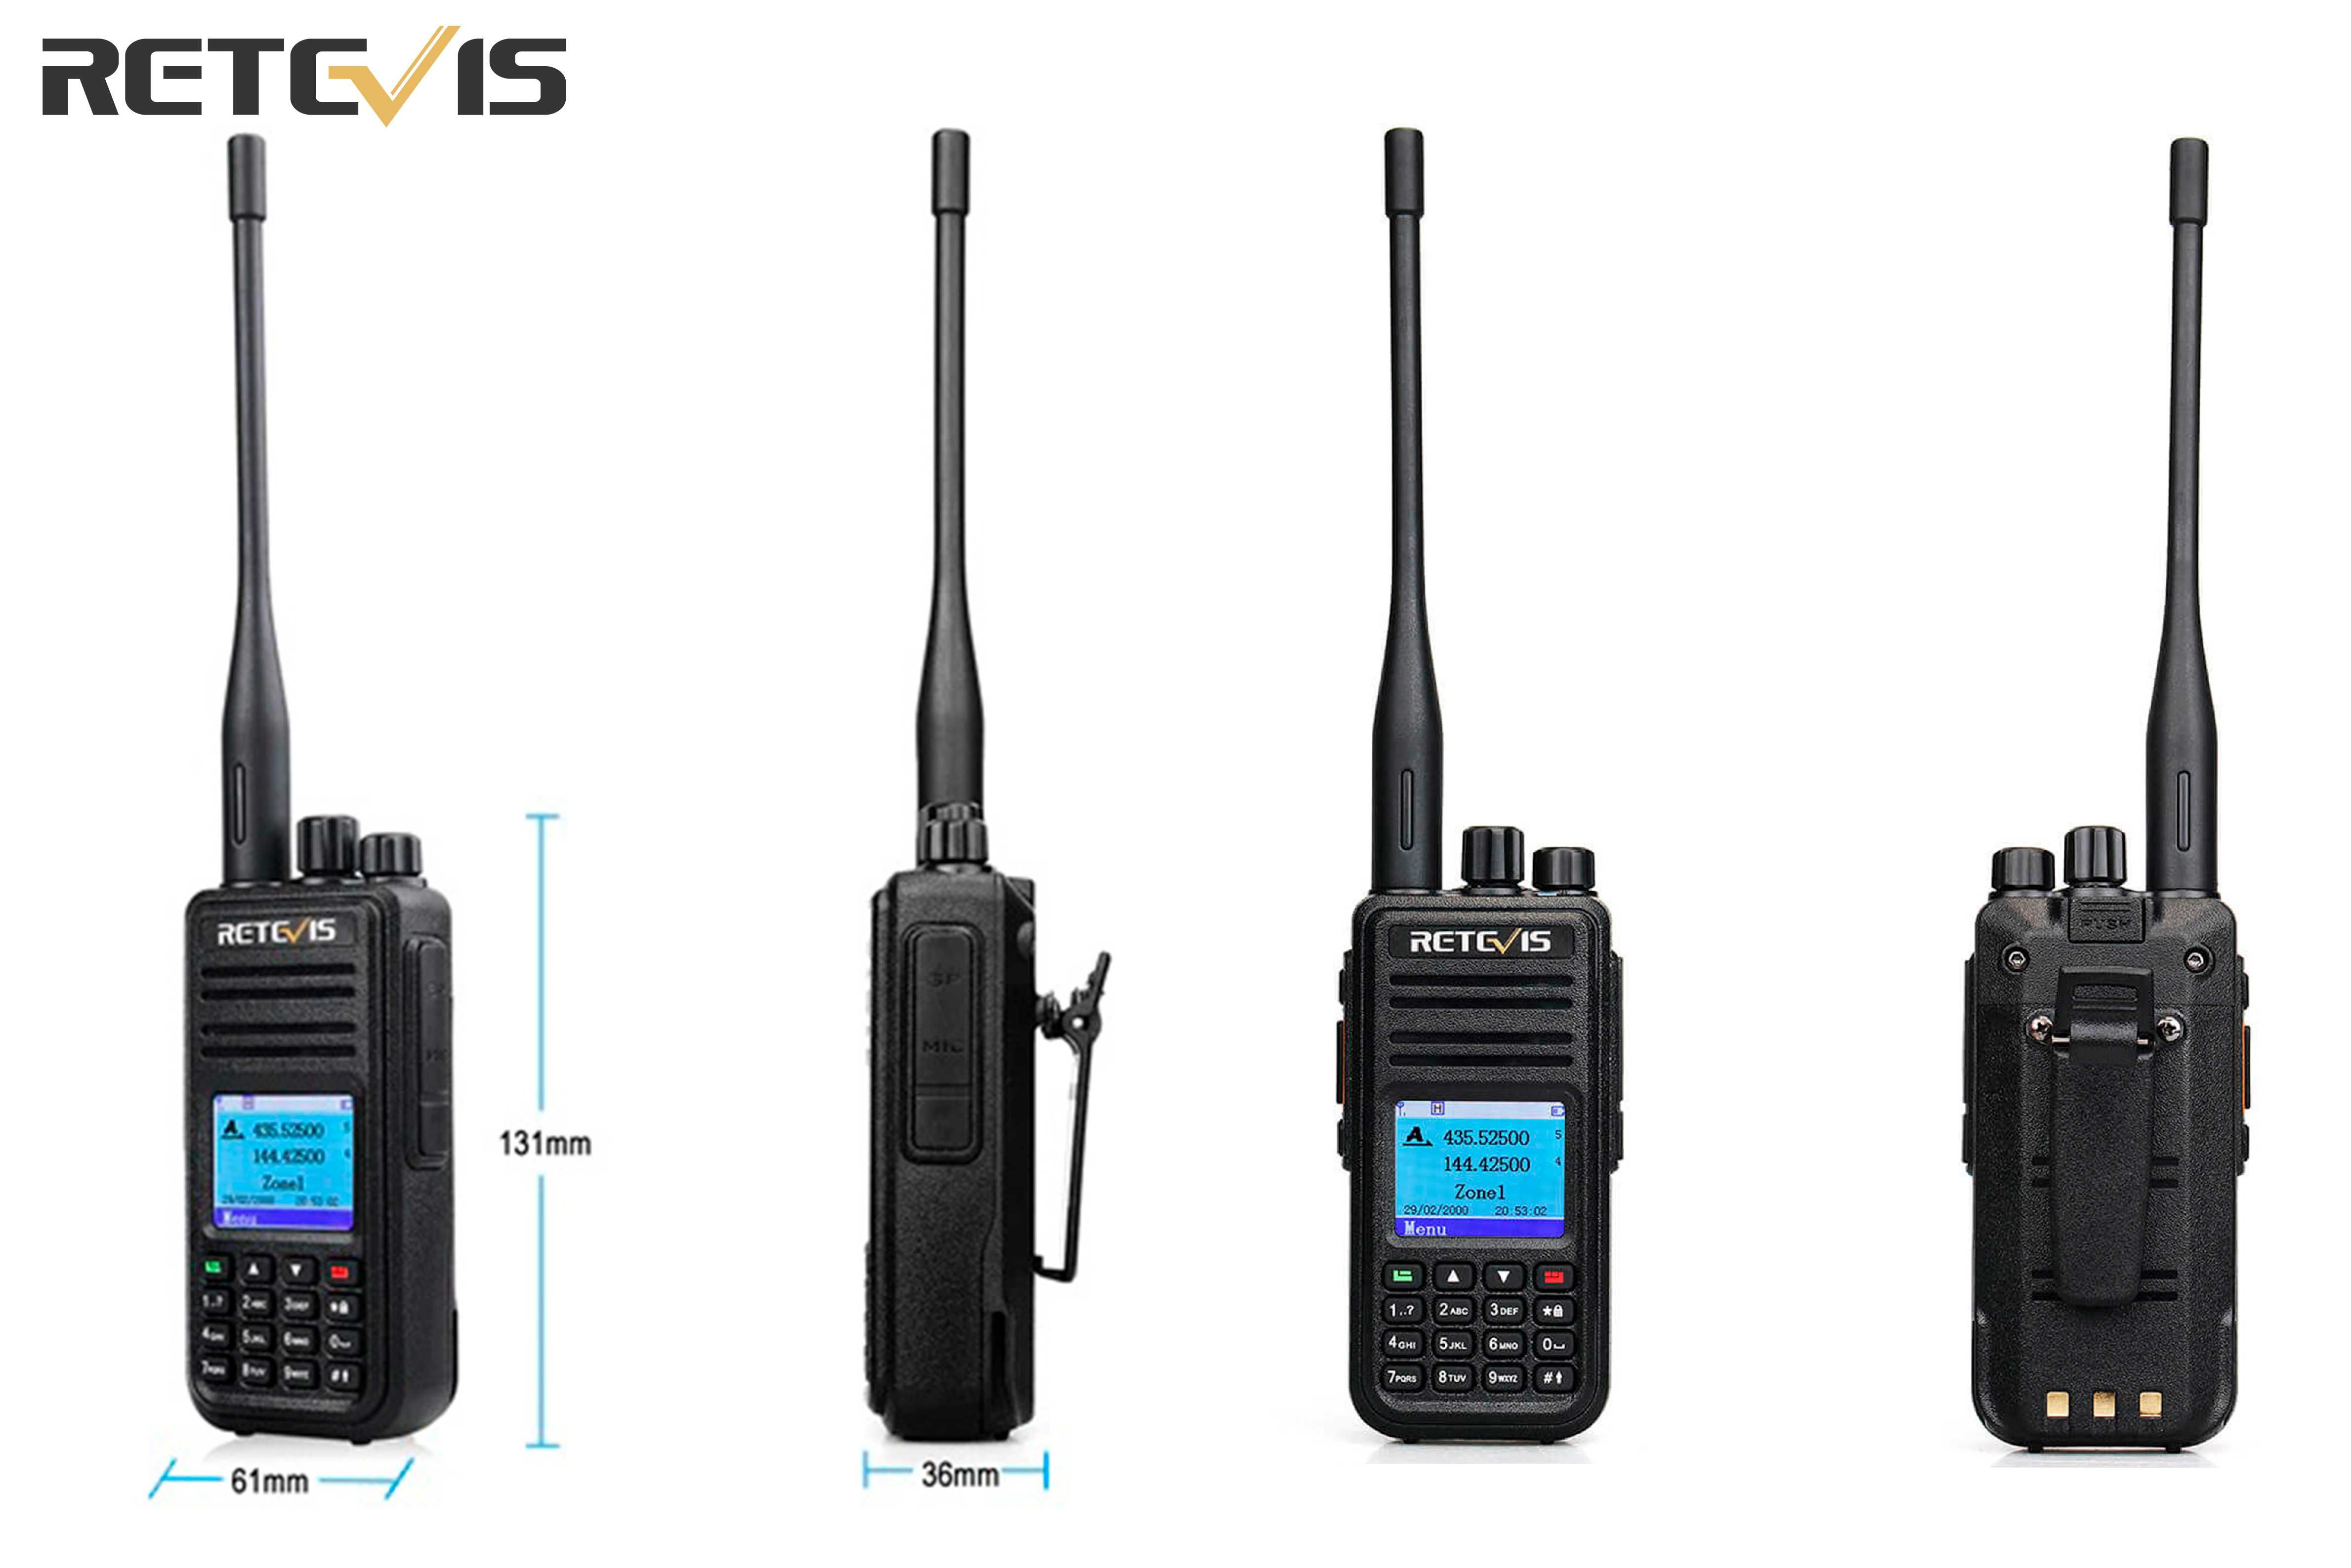 Rádio DMR Retévis RT3s VHF UHF com GPS